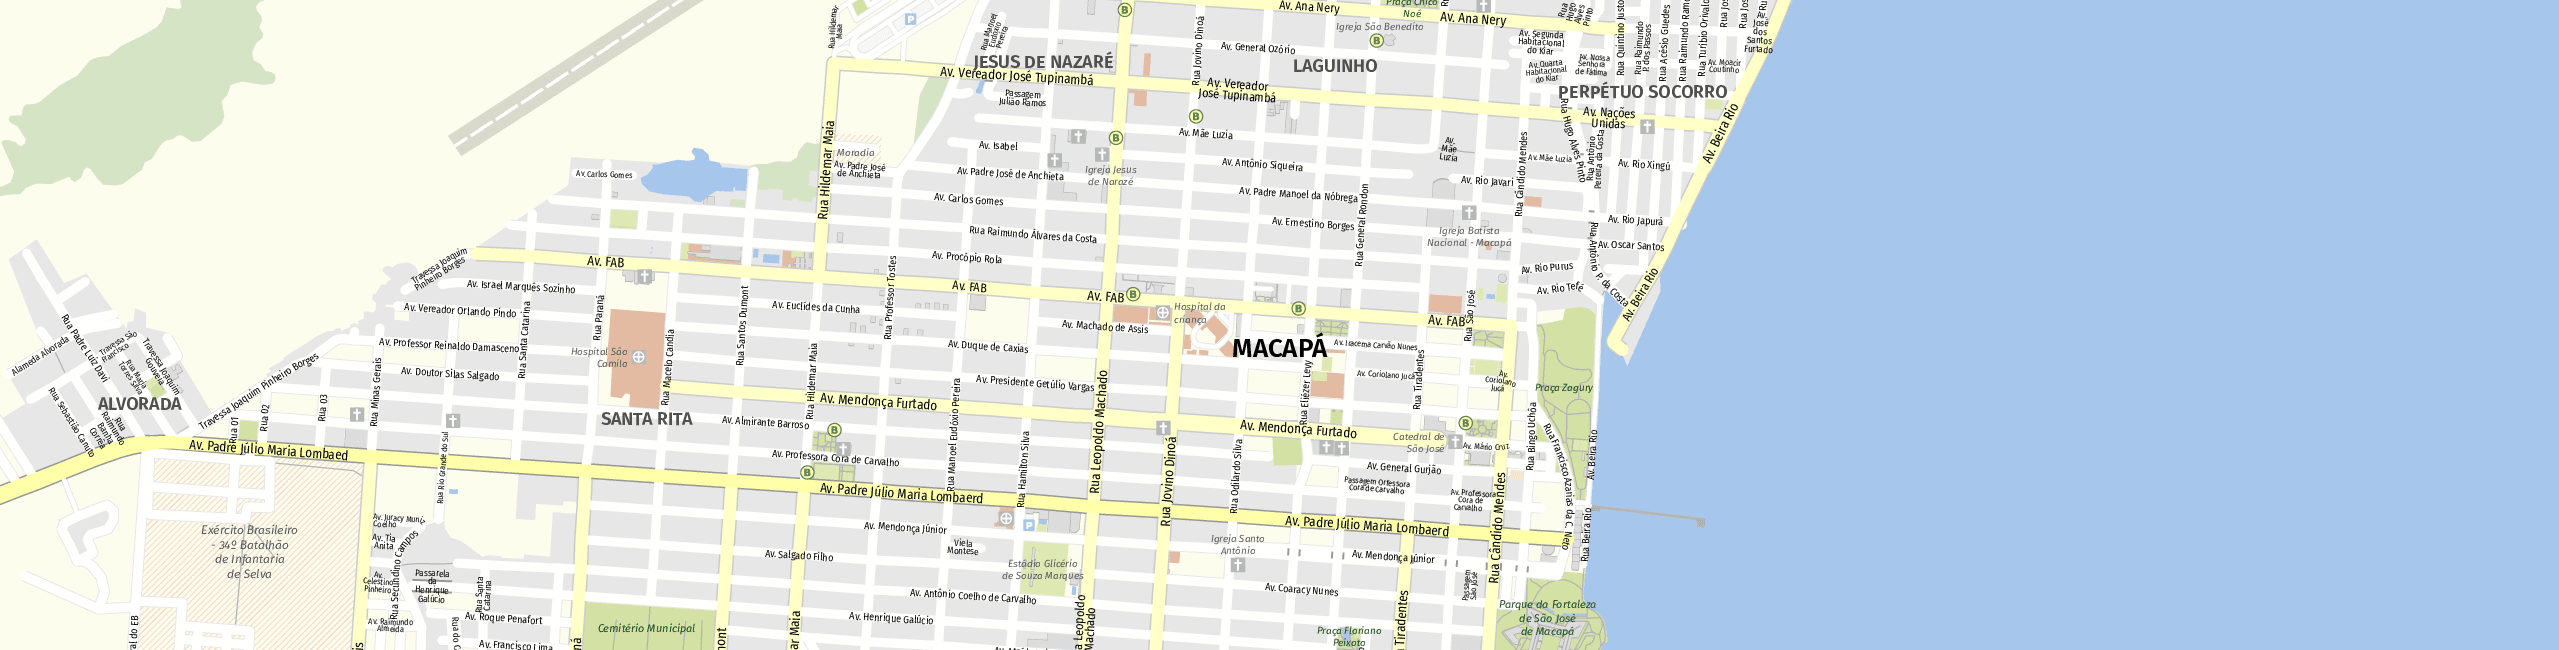 Stadtplan Macapá zum Downloaden.